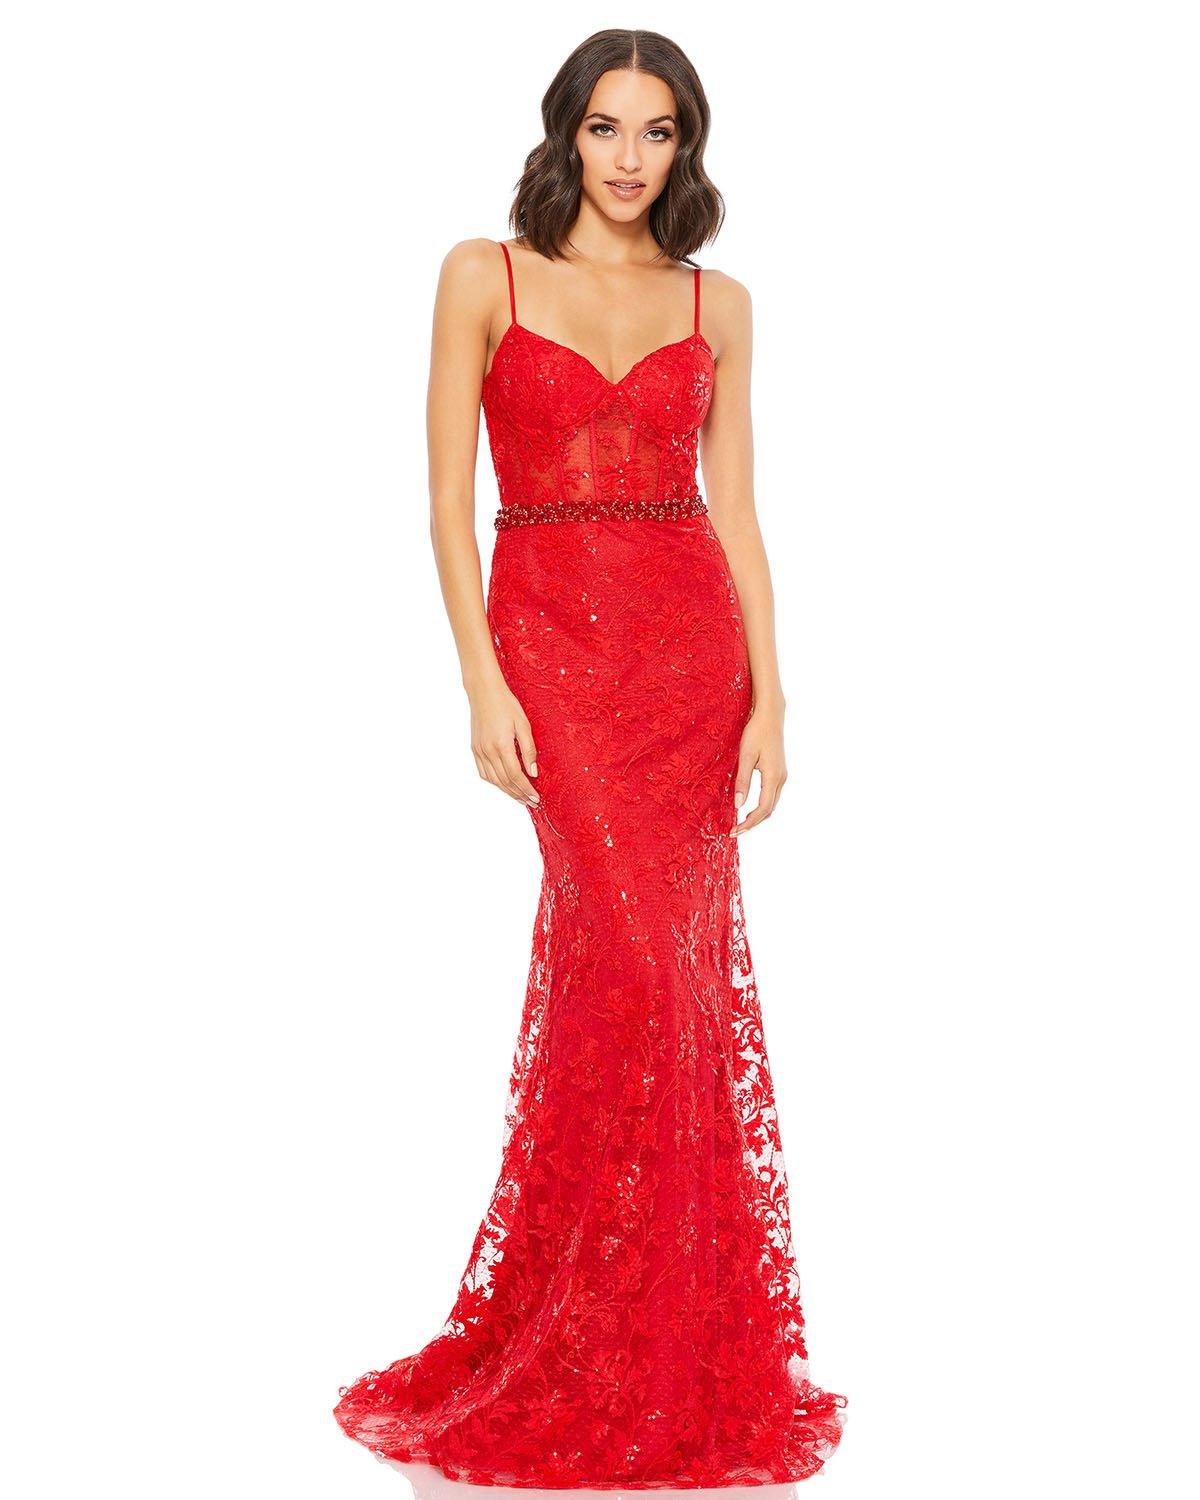 Mac Duggal Long Prom Dress 12406 - The Dress Outlet